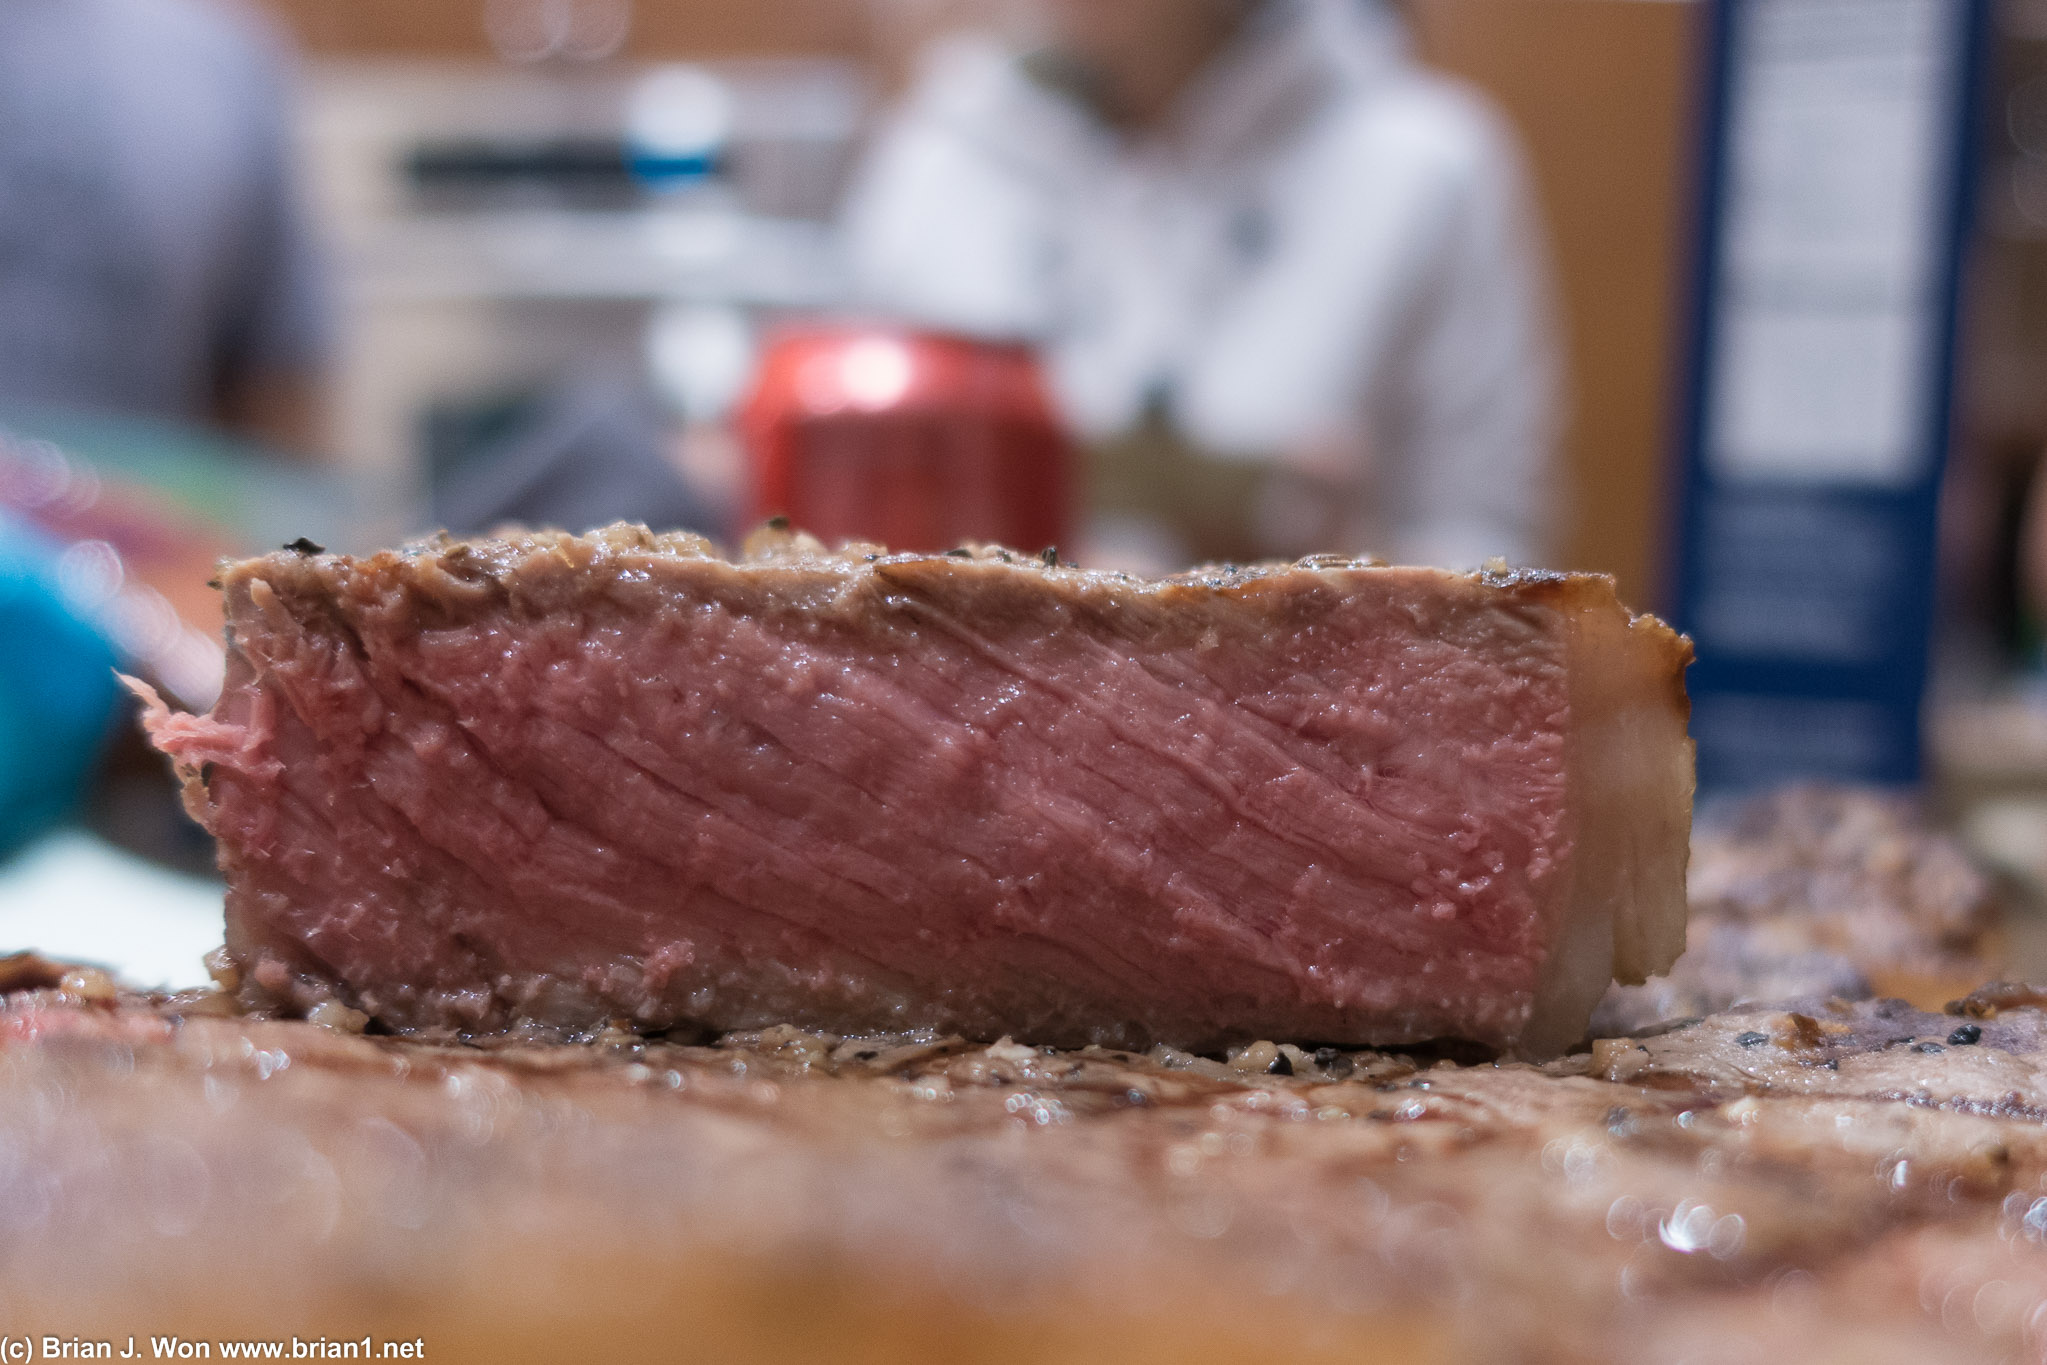 Half the steaks more medium, the other half rare.